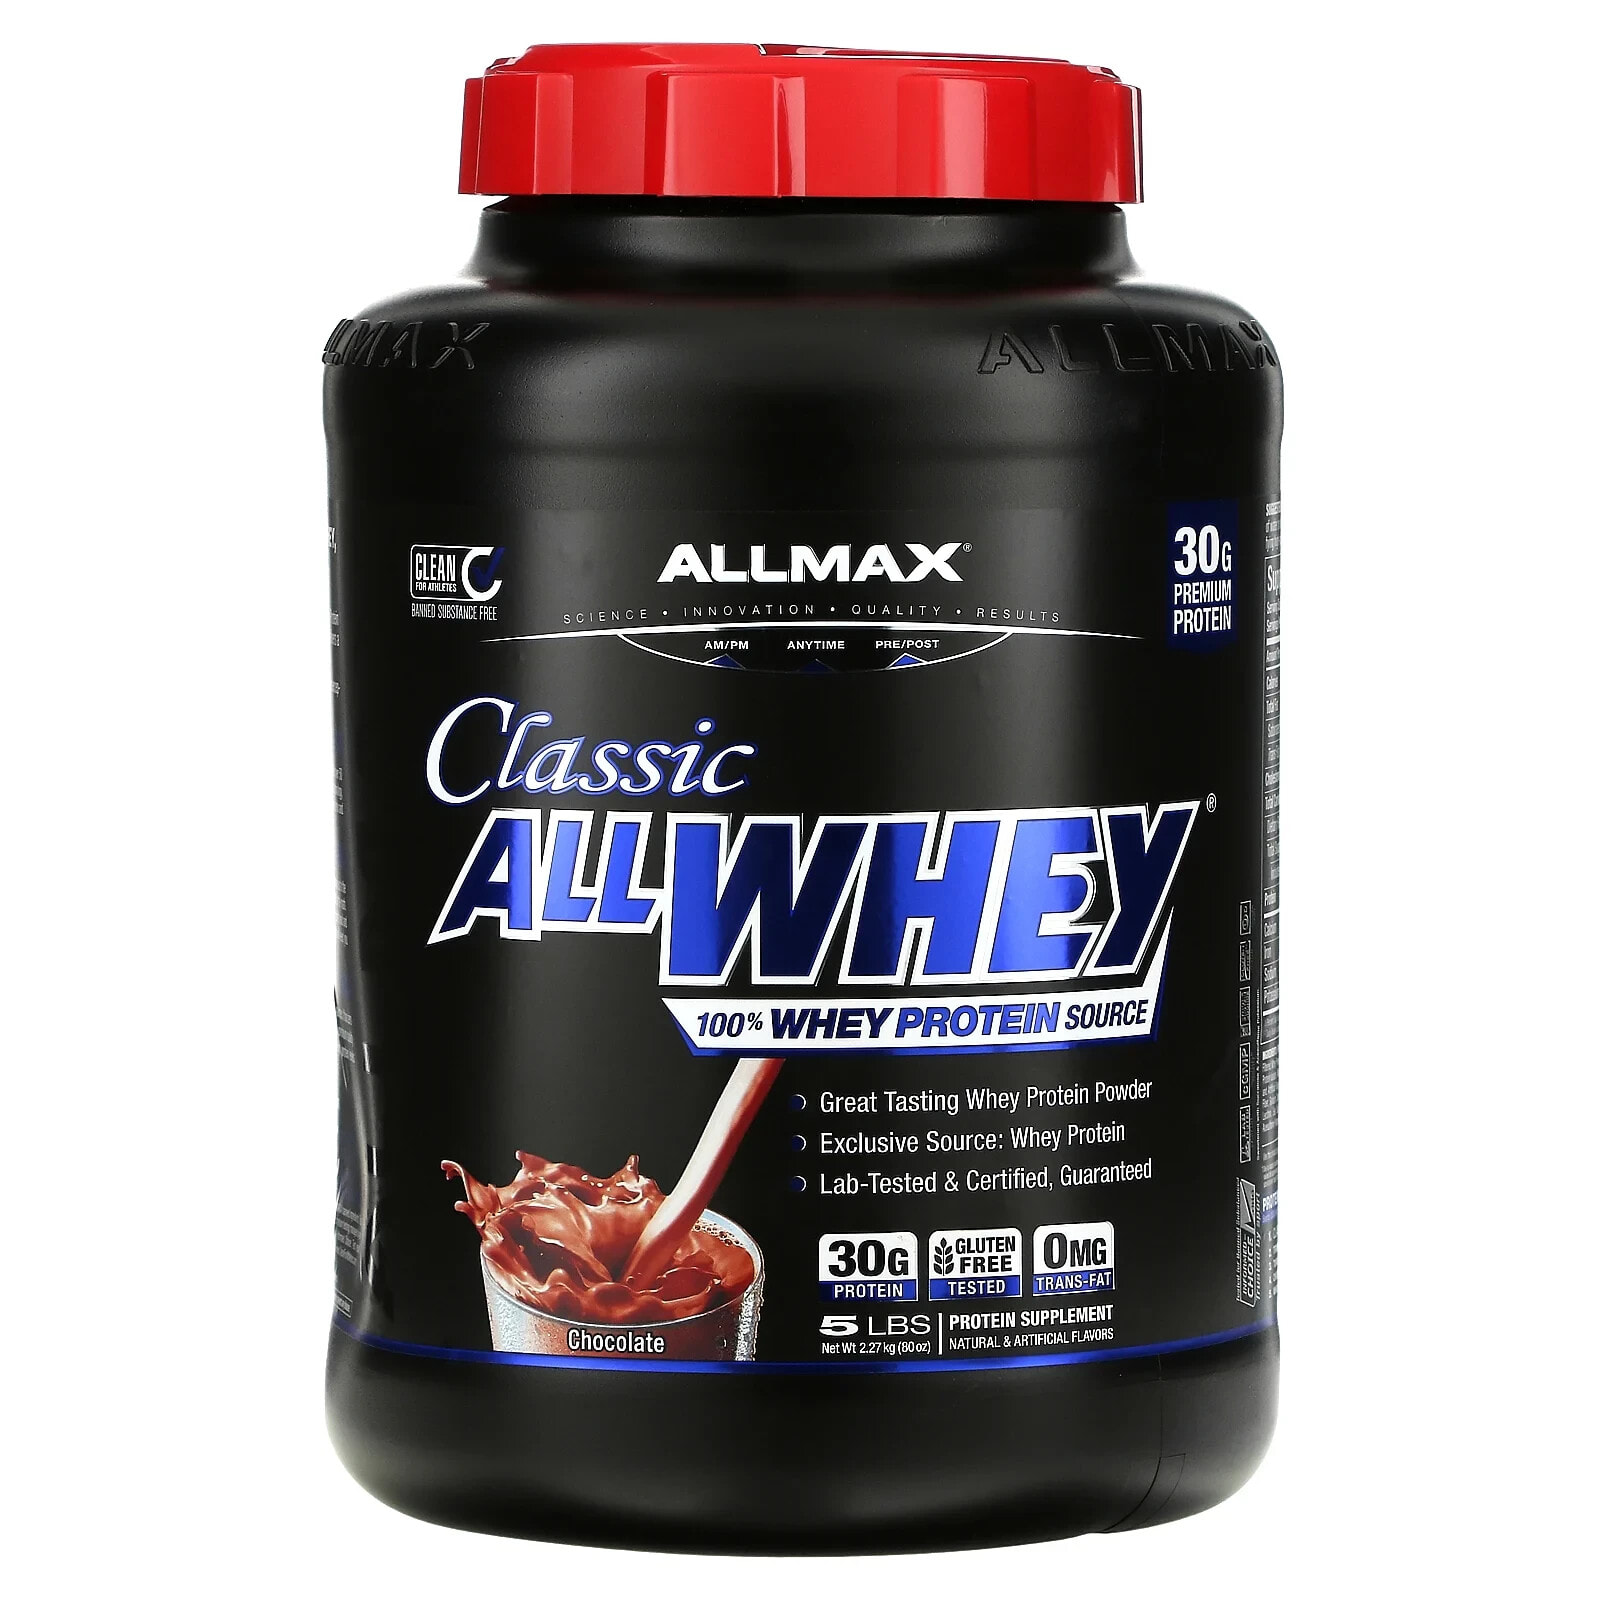 Classic AllWhey, 100% Whey Protein, Vanilla, 2 lbs (907 g)